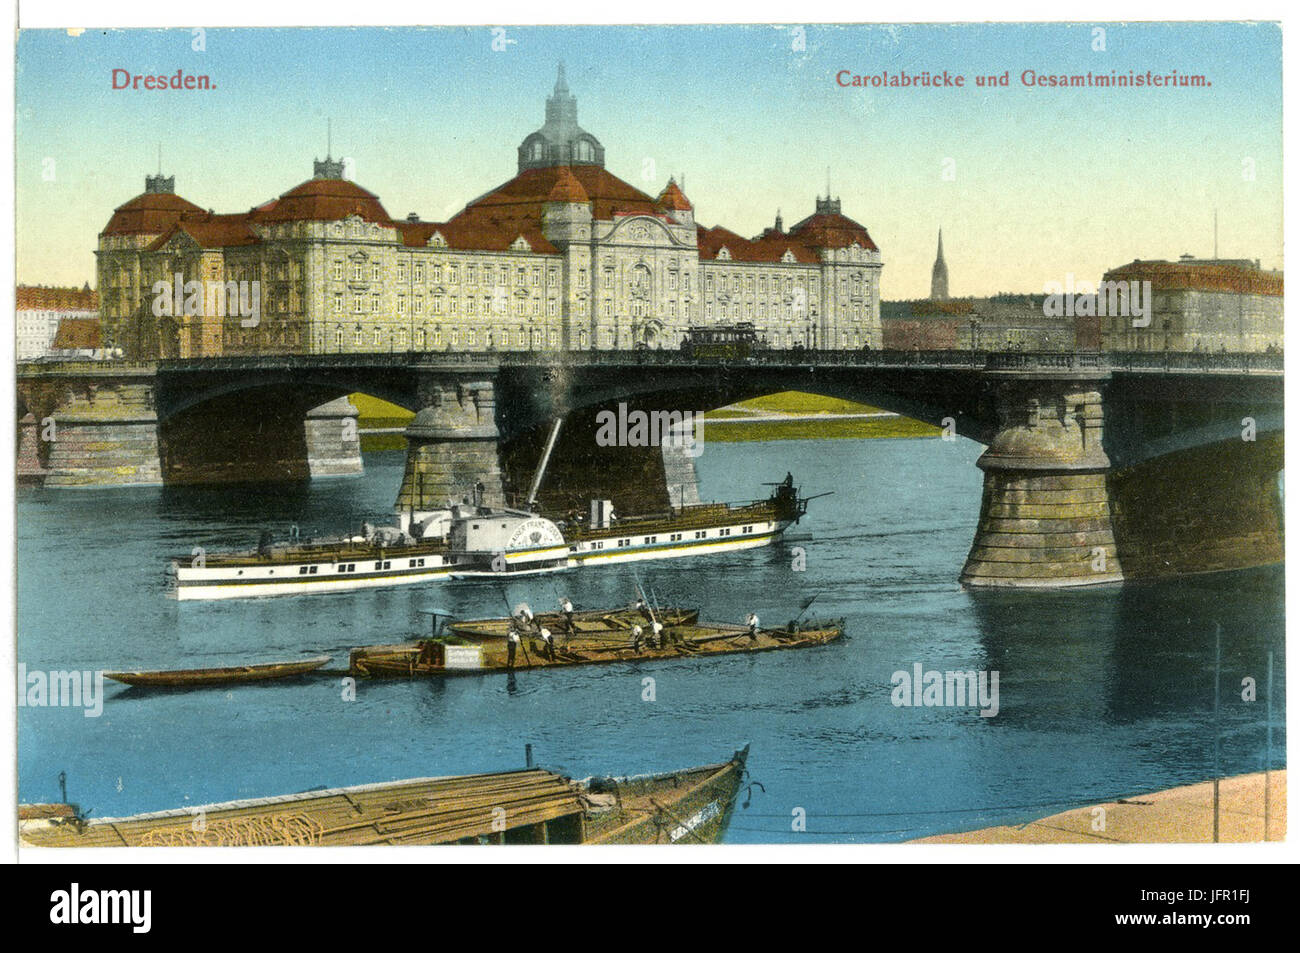 1 33-Dresden-1910-Gesamtministerium, Carolabrücke, Dampfer Kaiser Franz Josef-Brück & Sohn Kunstverlag Stock Photo